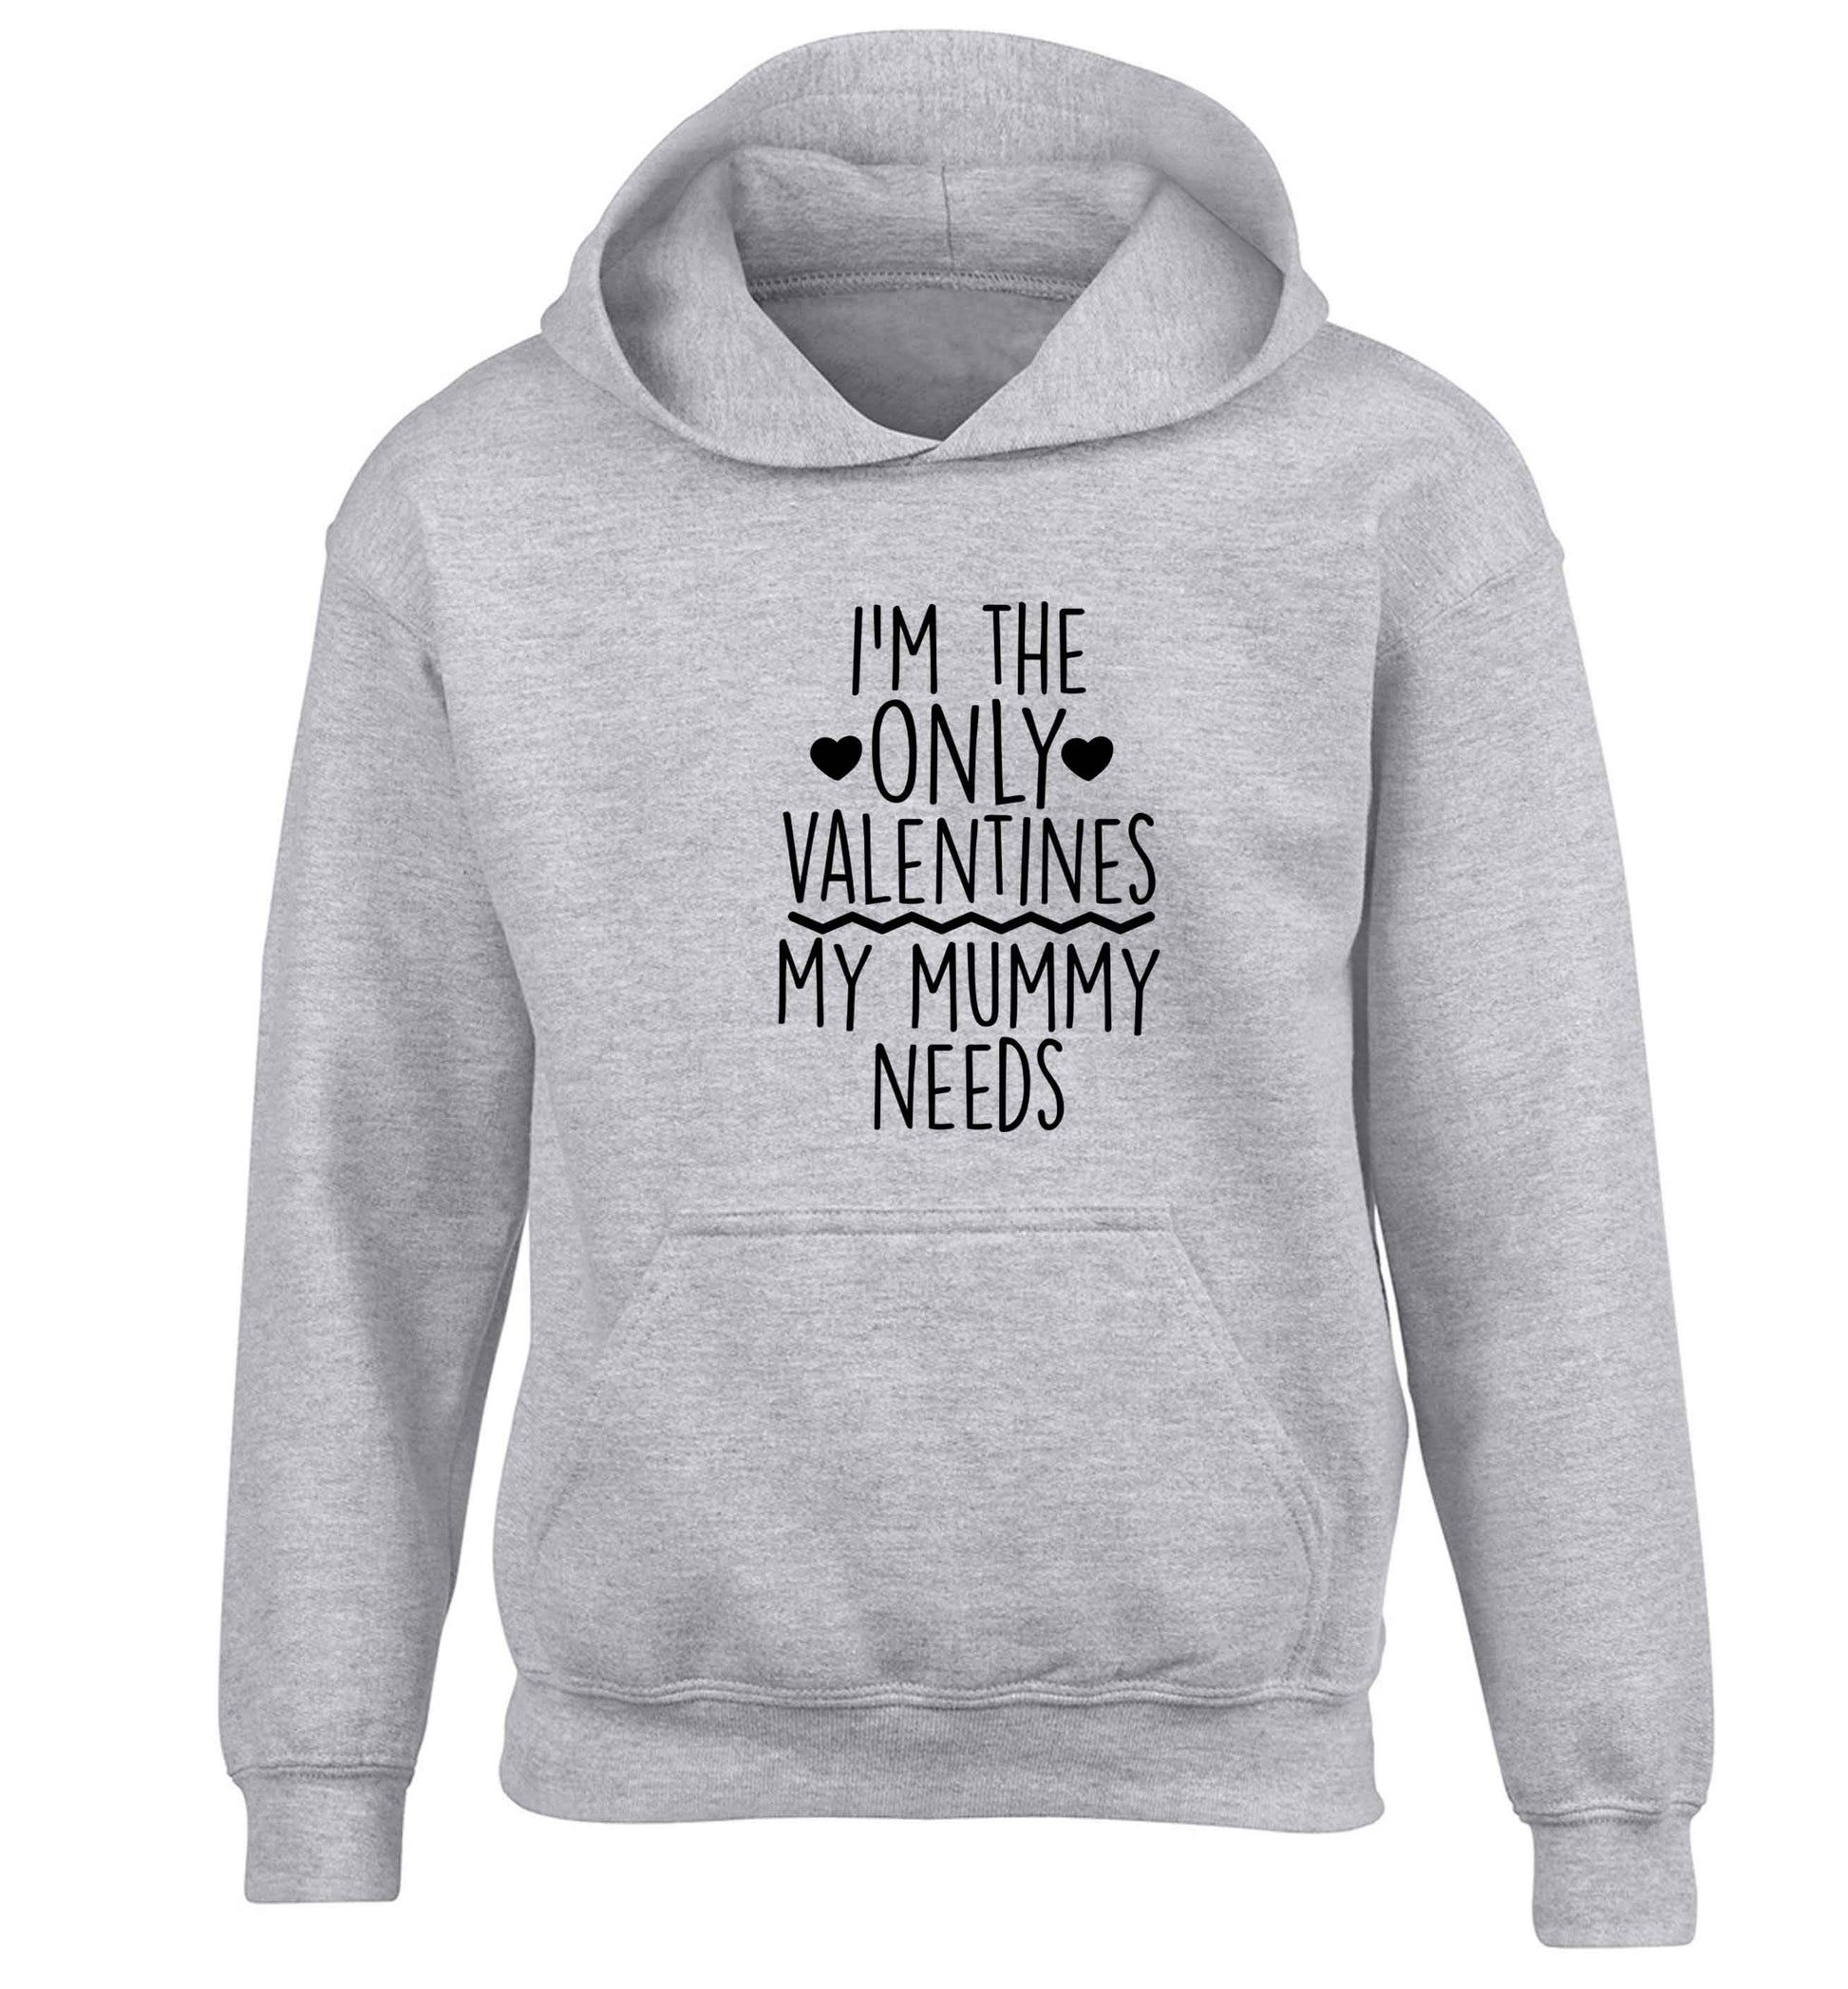 I'm the only valentines my mummy needs children's grey hoodie 12-13 Years